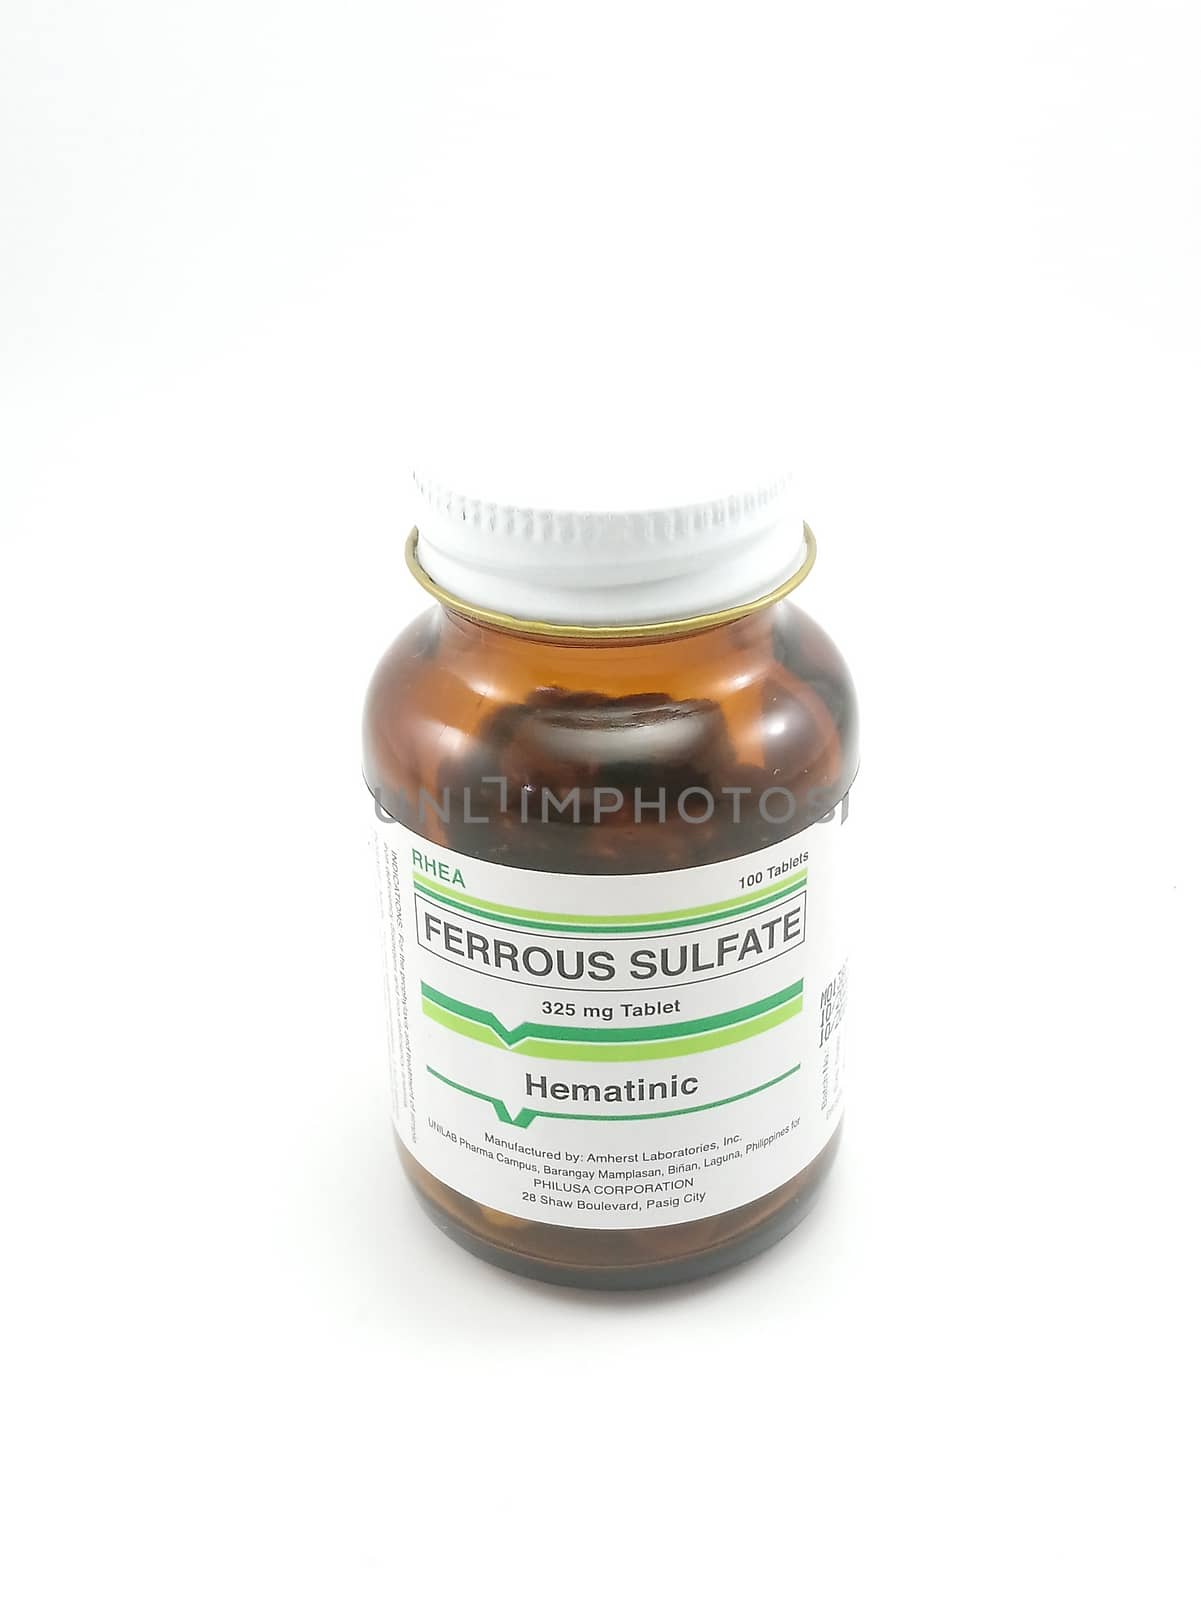 Rhea Ferrous sulfate hermatinic in Manila, Philippines by imwaltersy